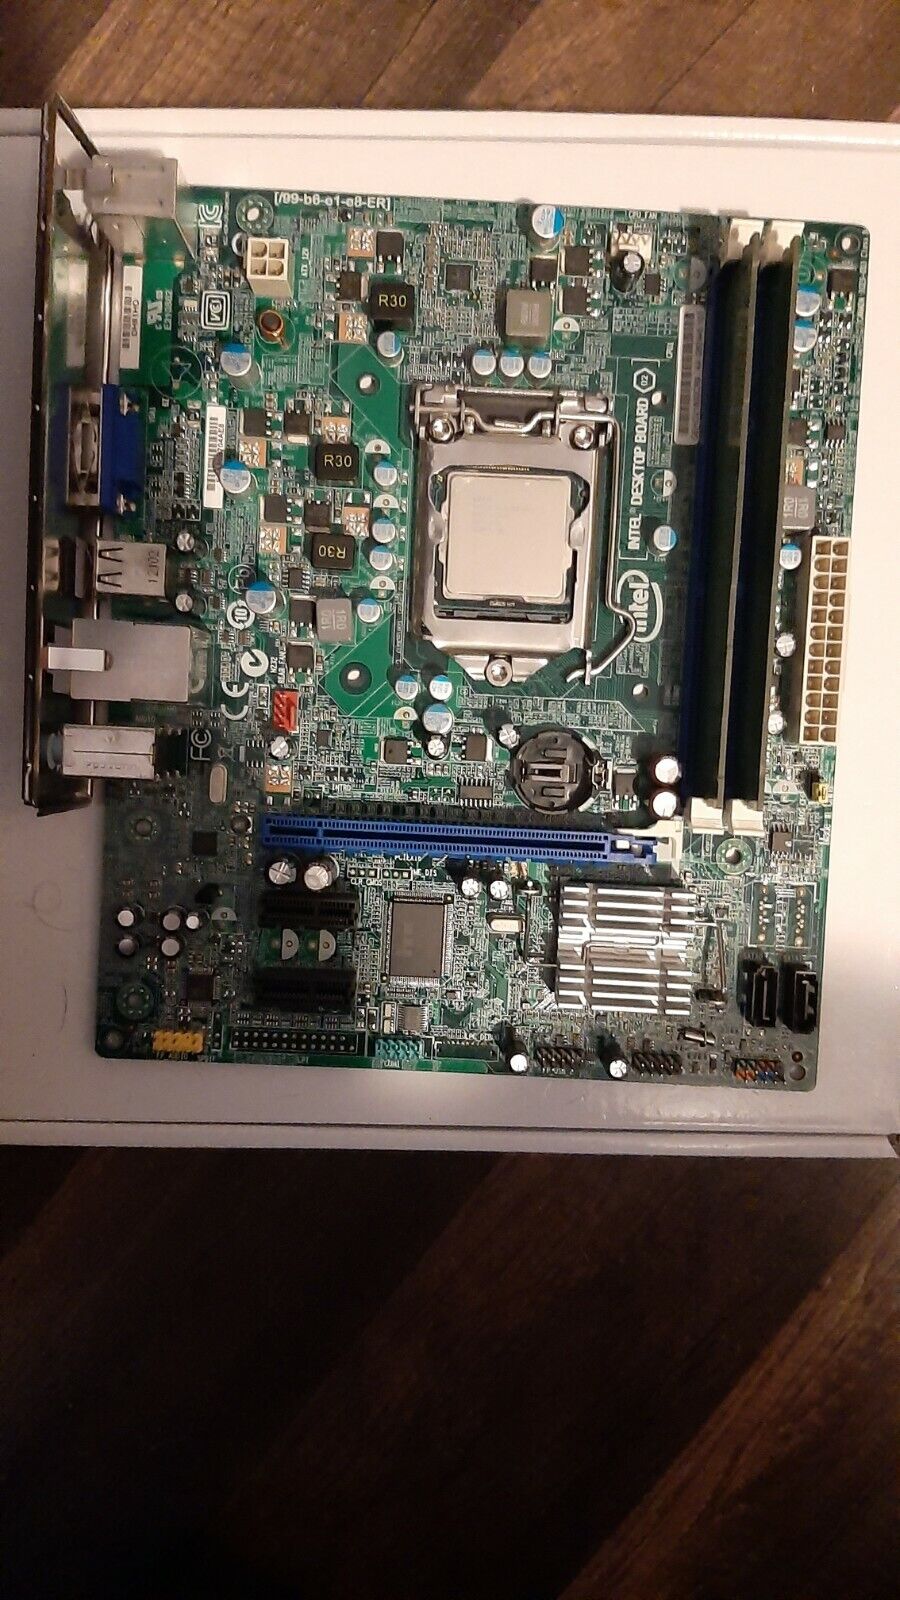 Intel DH61HO w/ Celeron G540, 4GB RAM & I/O Shield